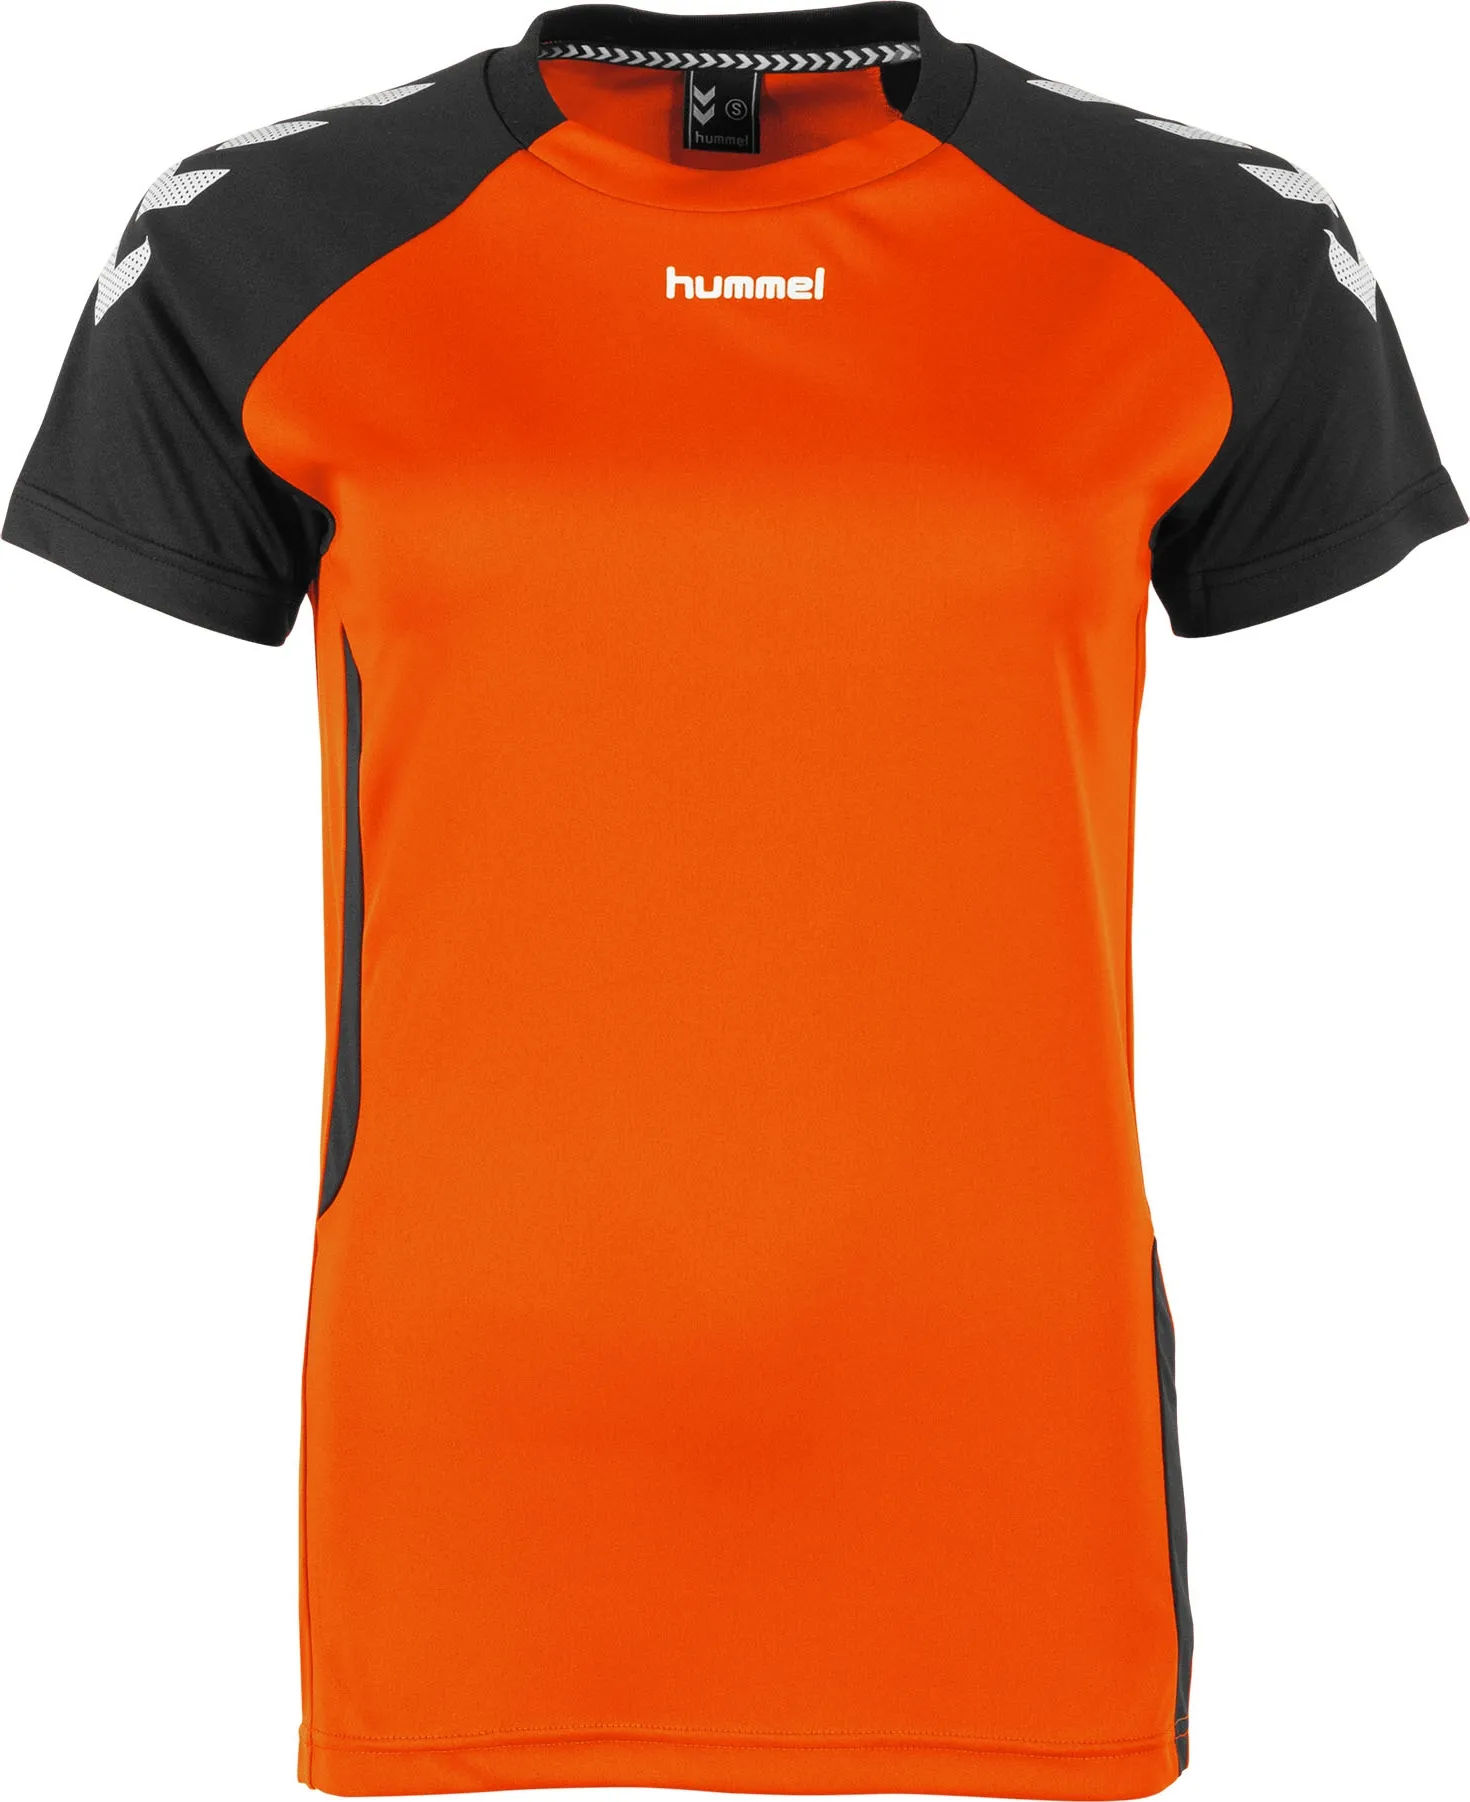 Trojaanse paard half acht Wolf in schaapskleren Hummel Authentic T-Shirt voor Dames | Oranje | Teamswear